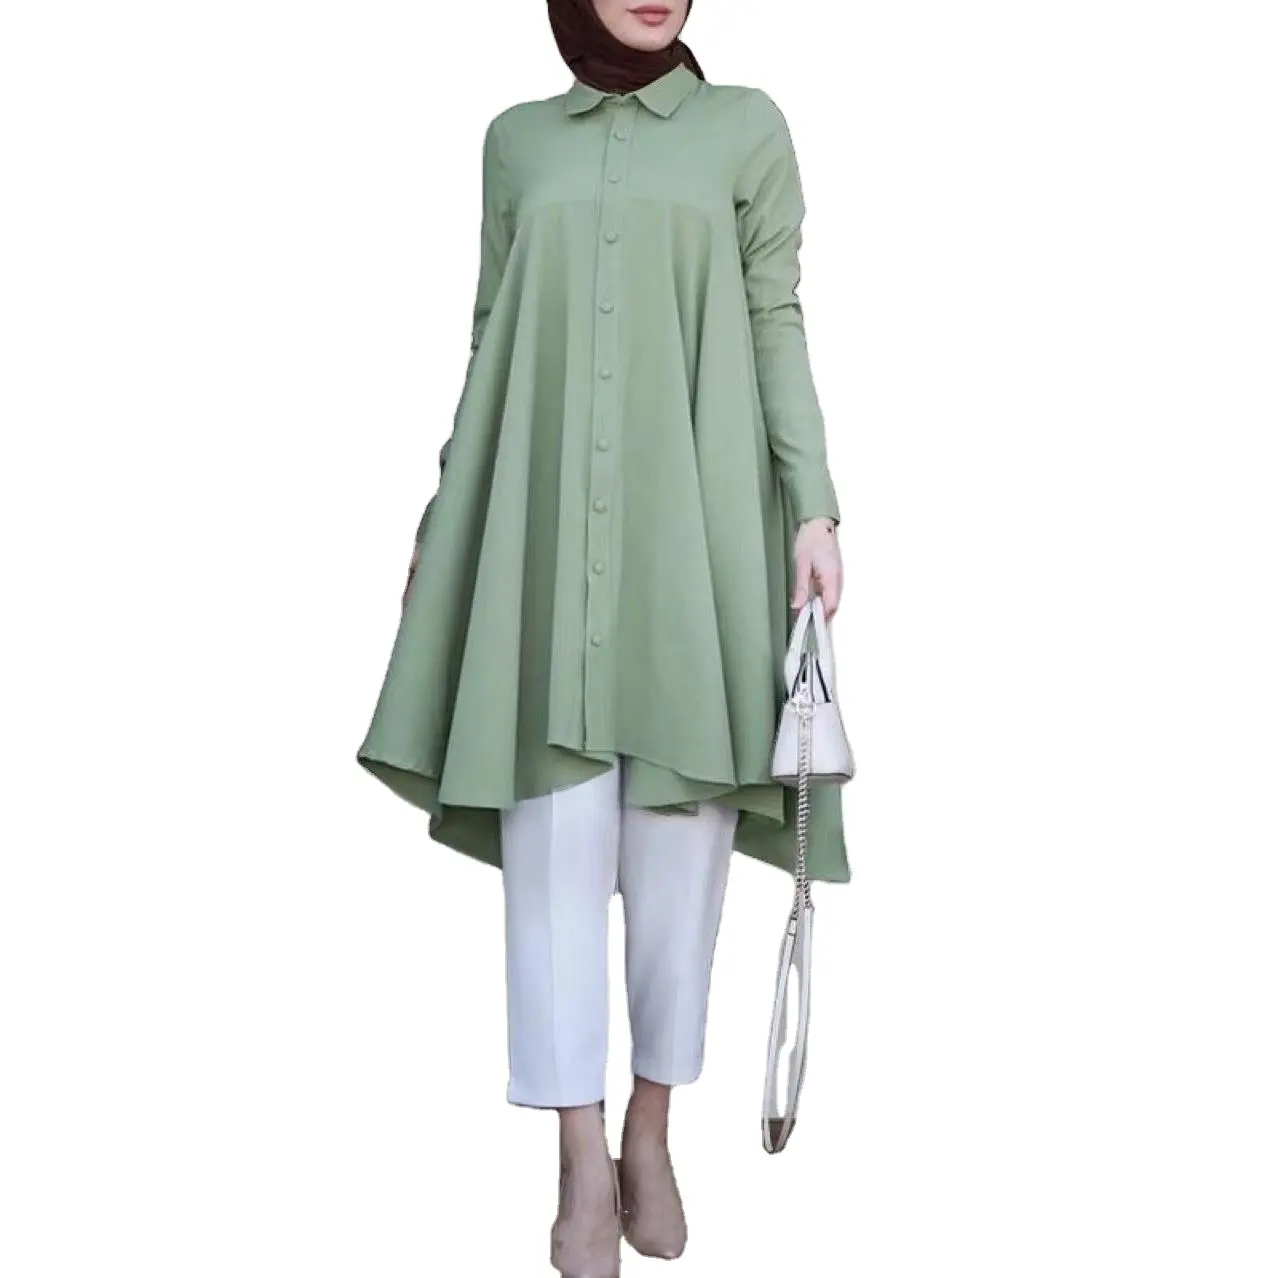 Middle East Muslim women's lapel button long sleeve irregular casual loose dress shirt skirt tunic